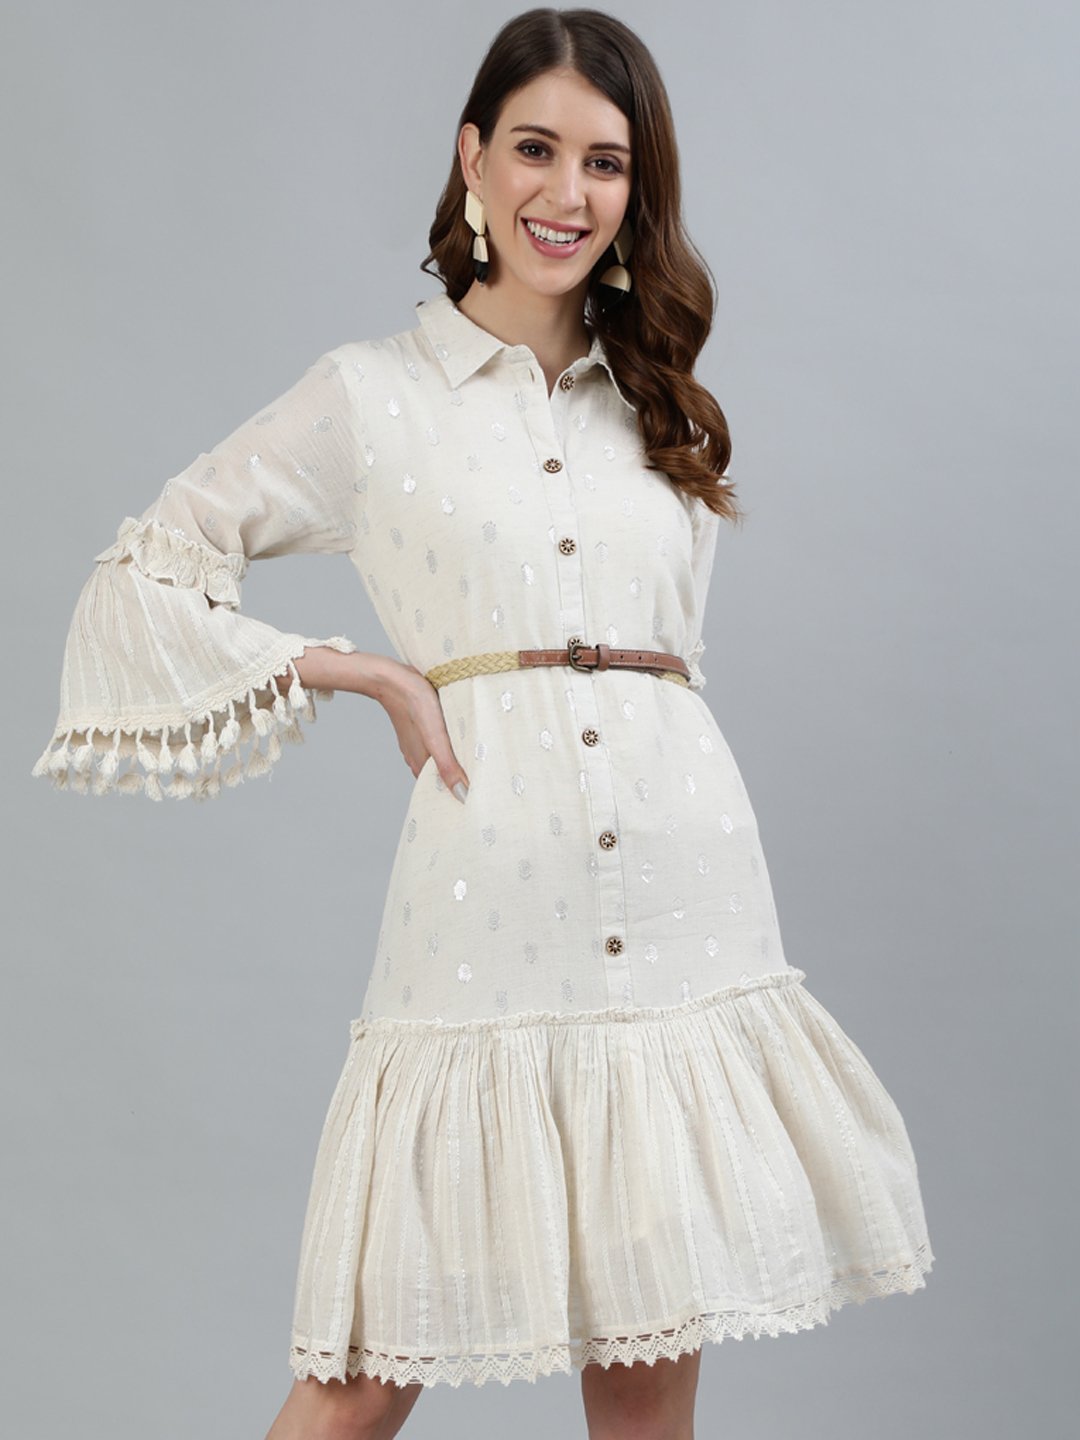 Ishin Women's Cotton Off White Embellished A-Line Dress